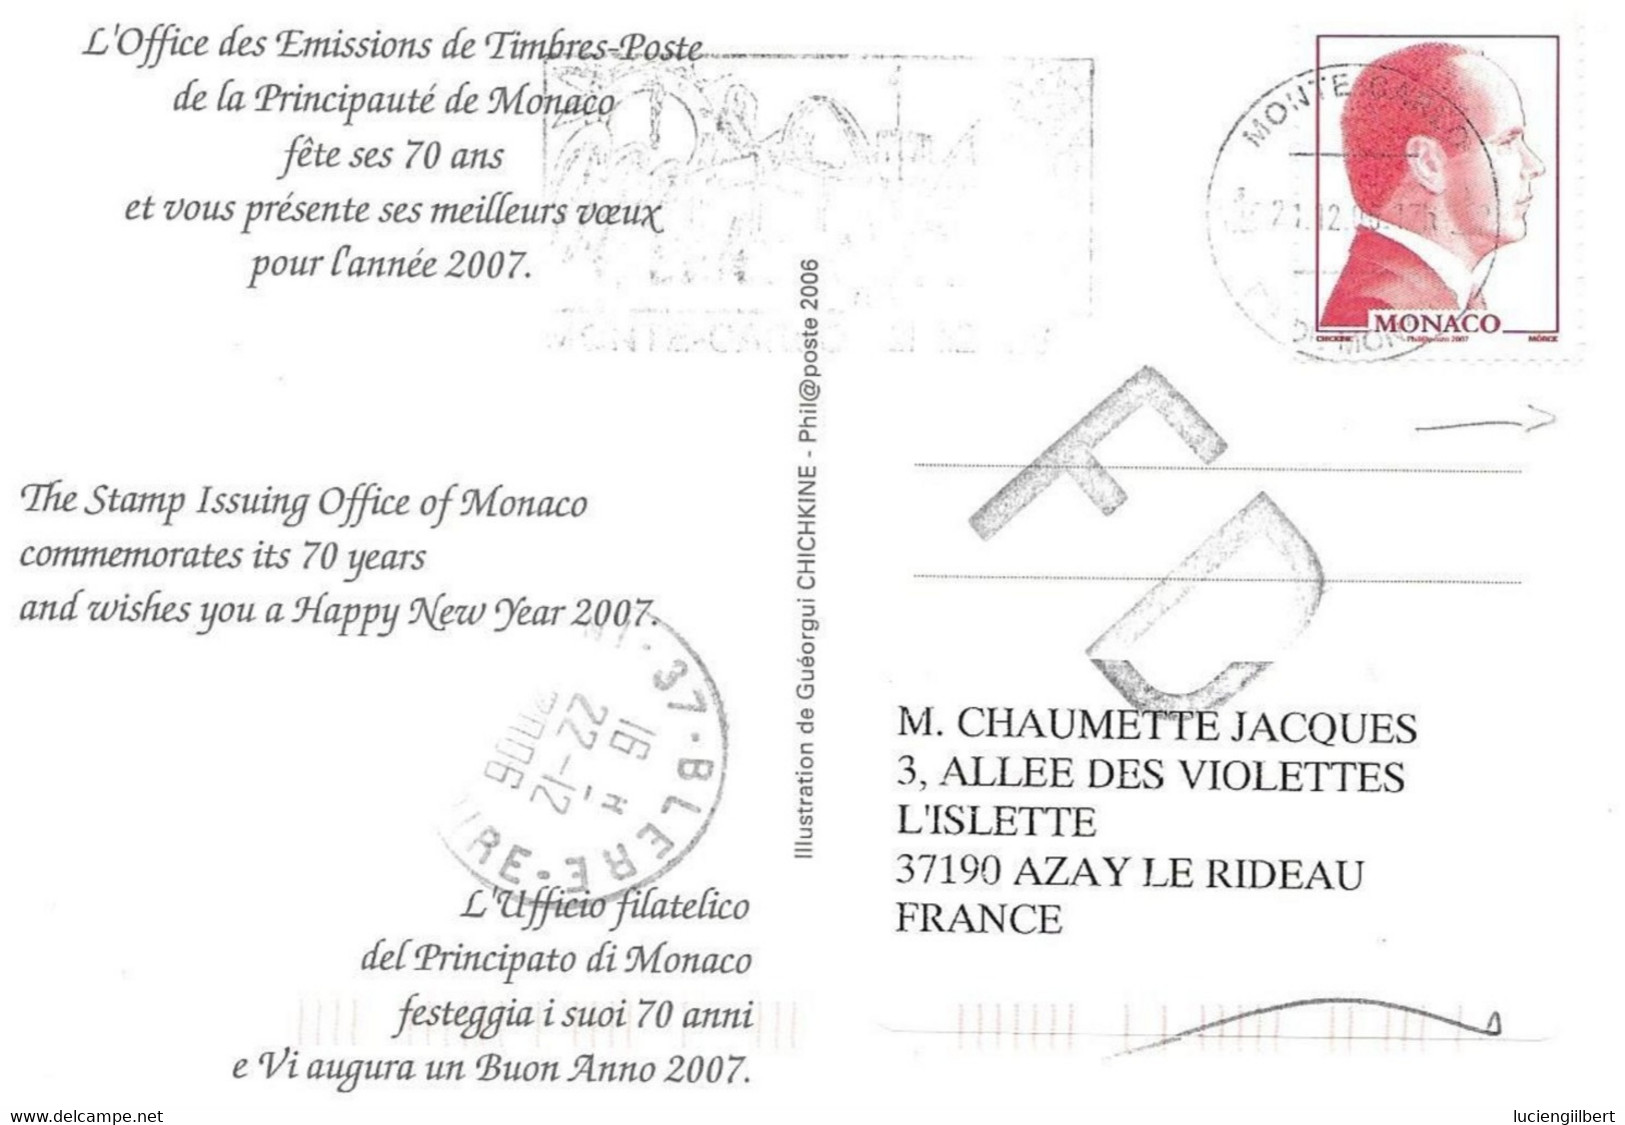 MONACO  -   MONTE CARLO  -   TIMBRE N° 2562 -   TARIF DU 1 10 06 AU 28 2 08 -  -  2006 - GRAVURE S.A.S. PRINCE ALBERT II - Brieven En Documenten